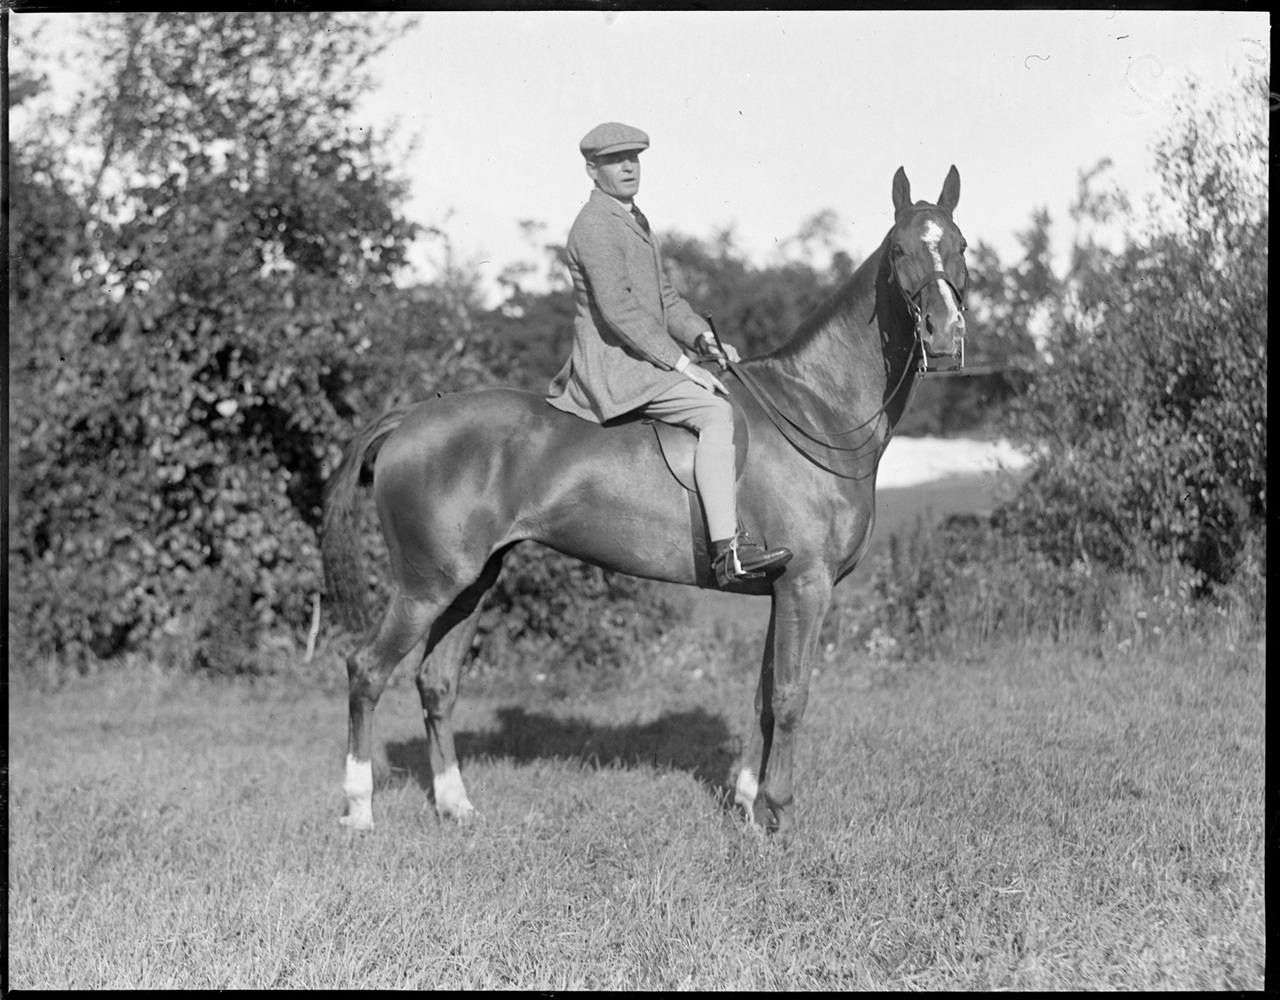 Bayard Tuckerman, Jr. at Southborough, Massachusetts (Courtesy of the Boston Public Library, Leslie Jones Collection)